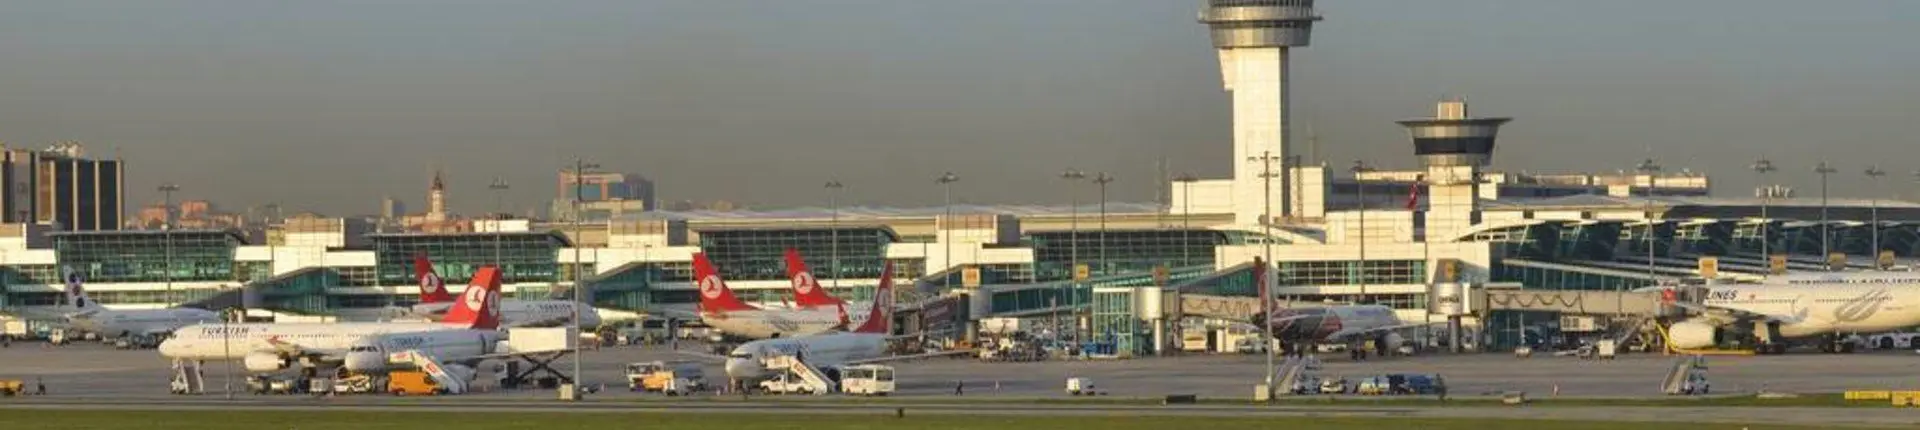 https://cdn2.enuygun.com/media/lib/1920x430/uploads/image/istanbul-ataturk-airport-ek056-11690.webp